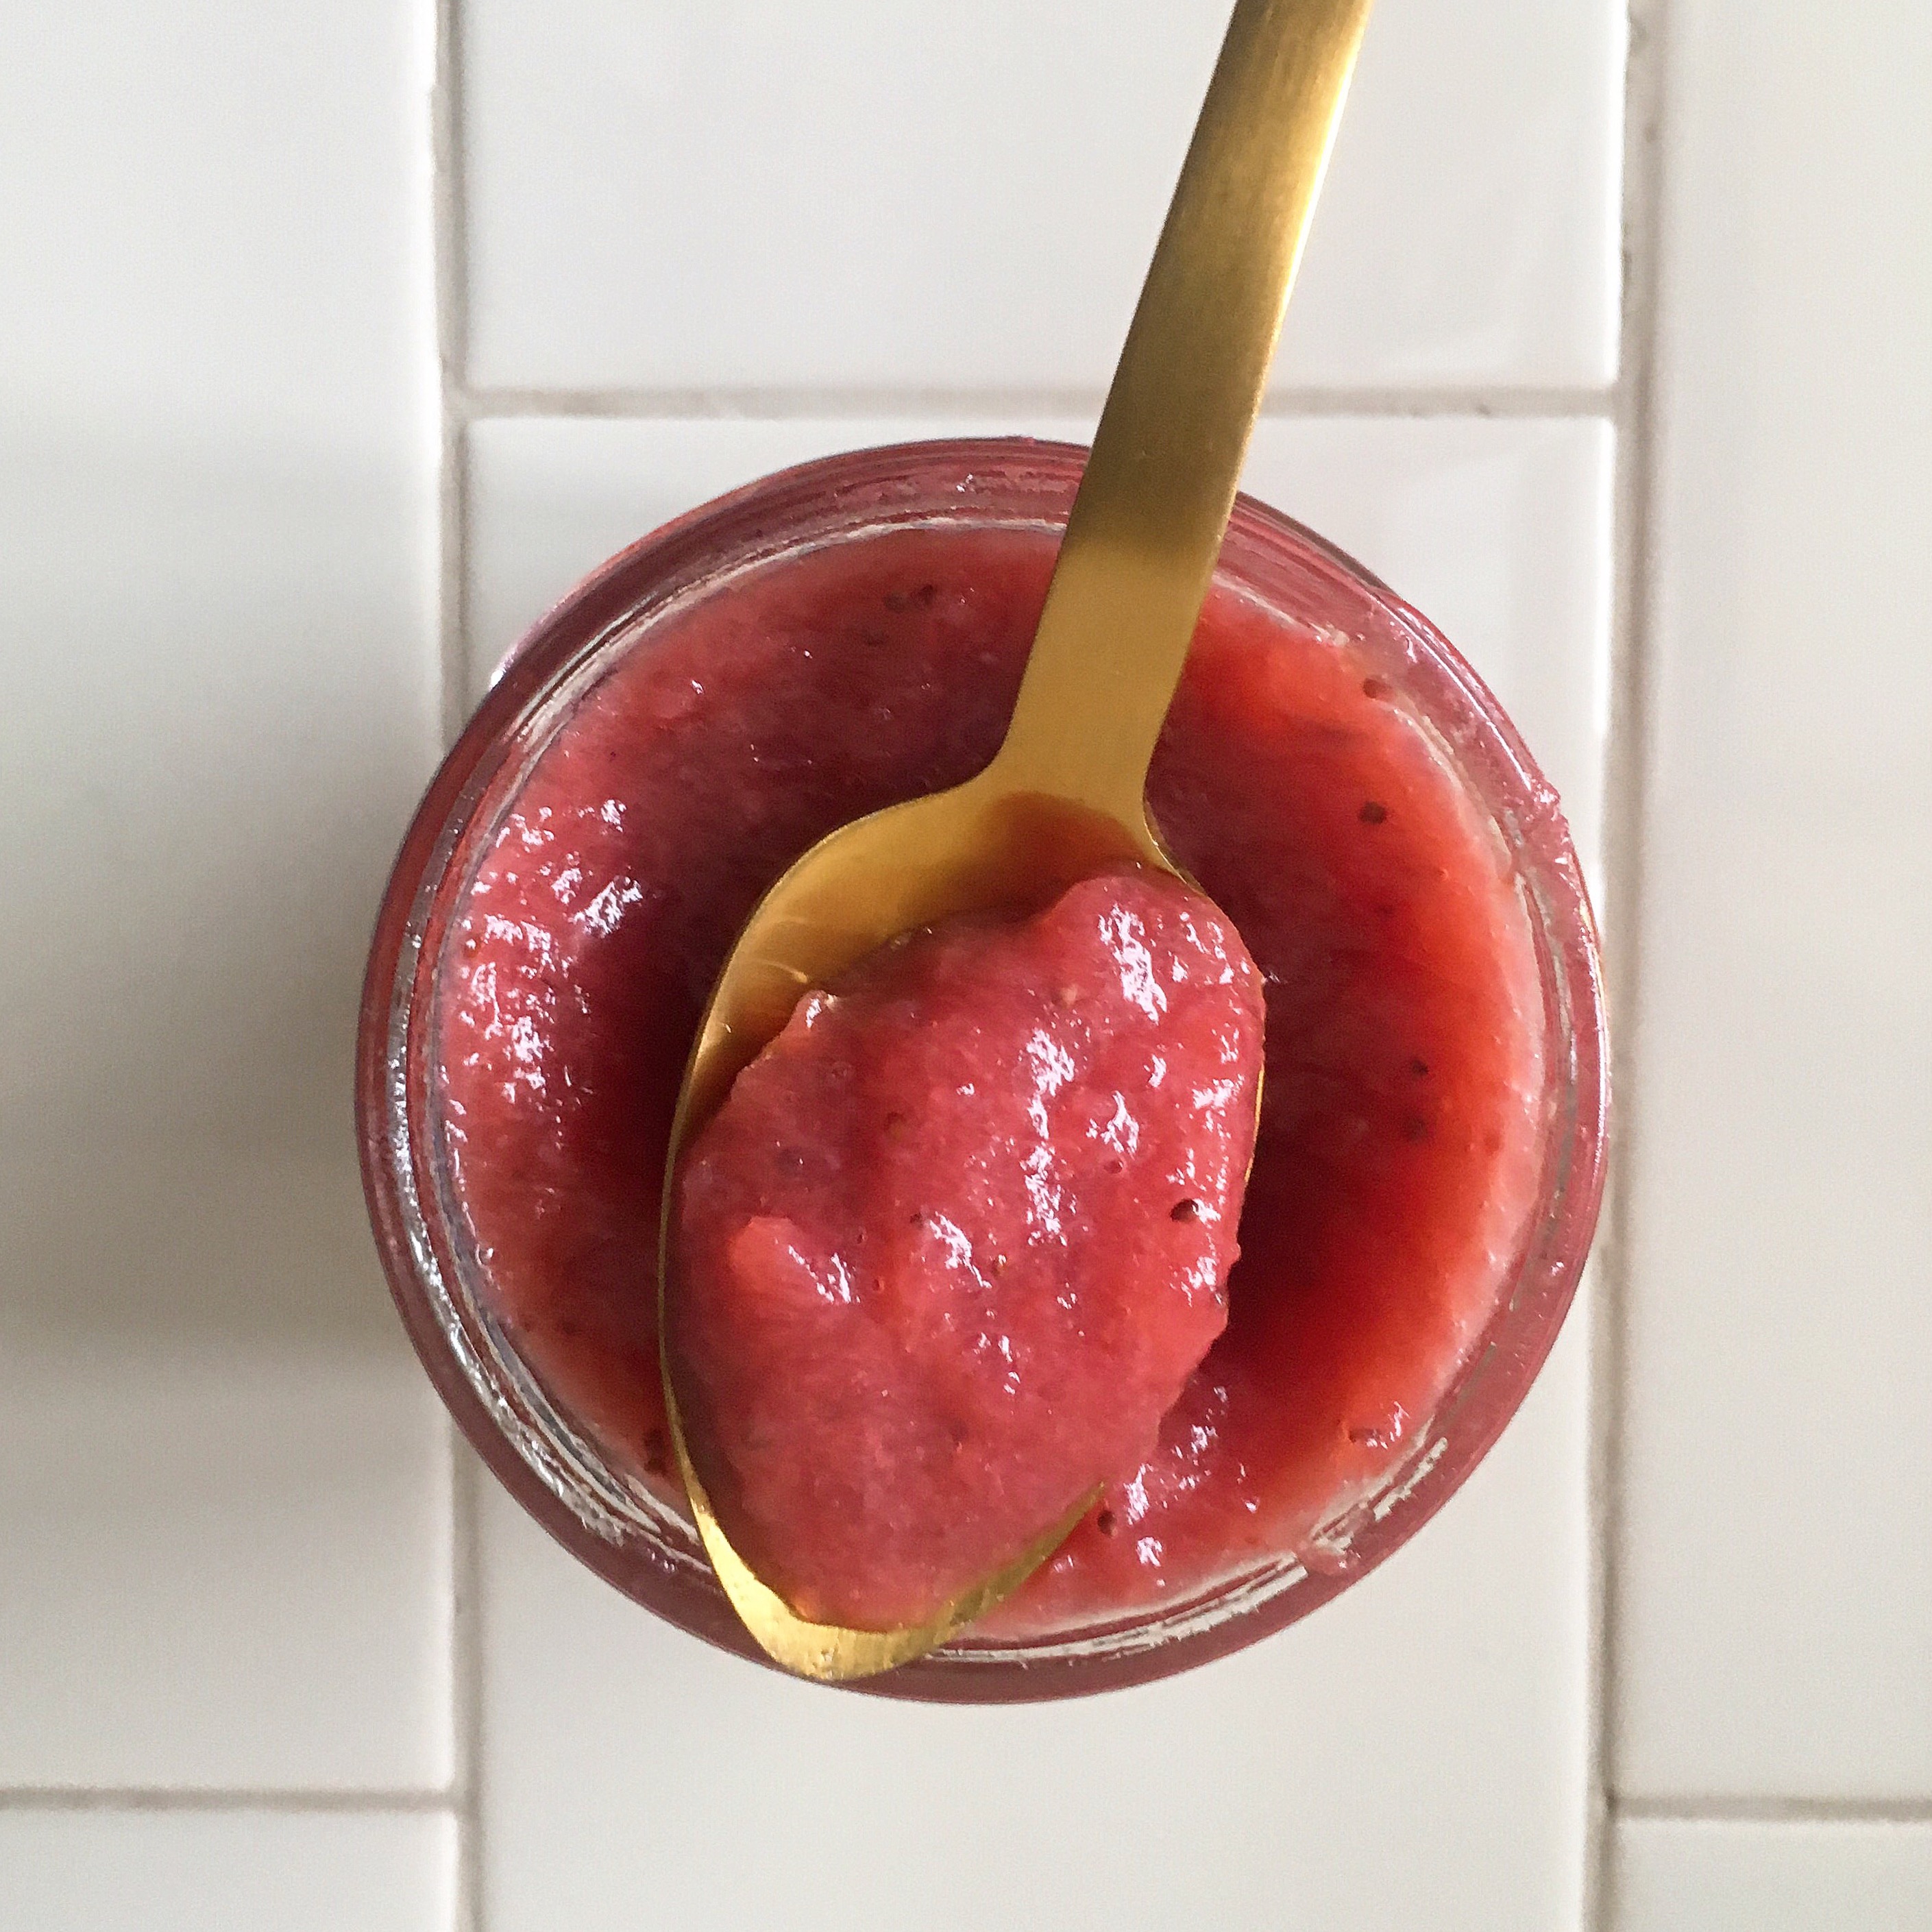  afire Strawberry Rhubarb Applesauce